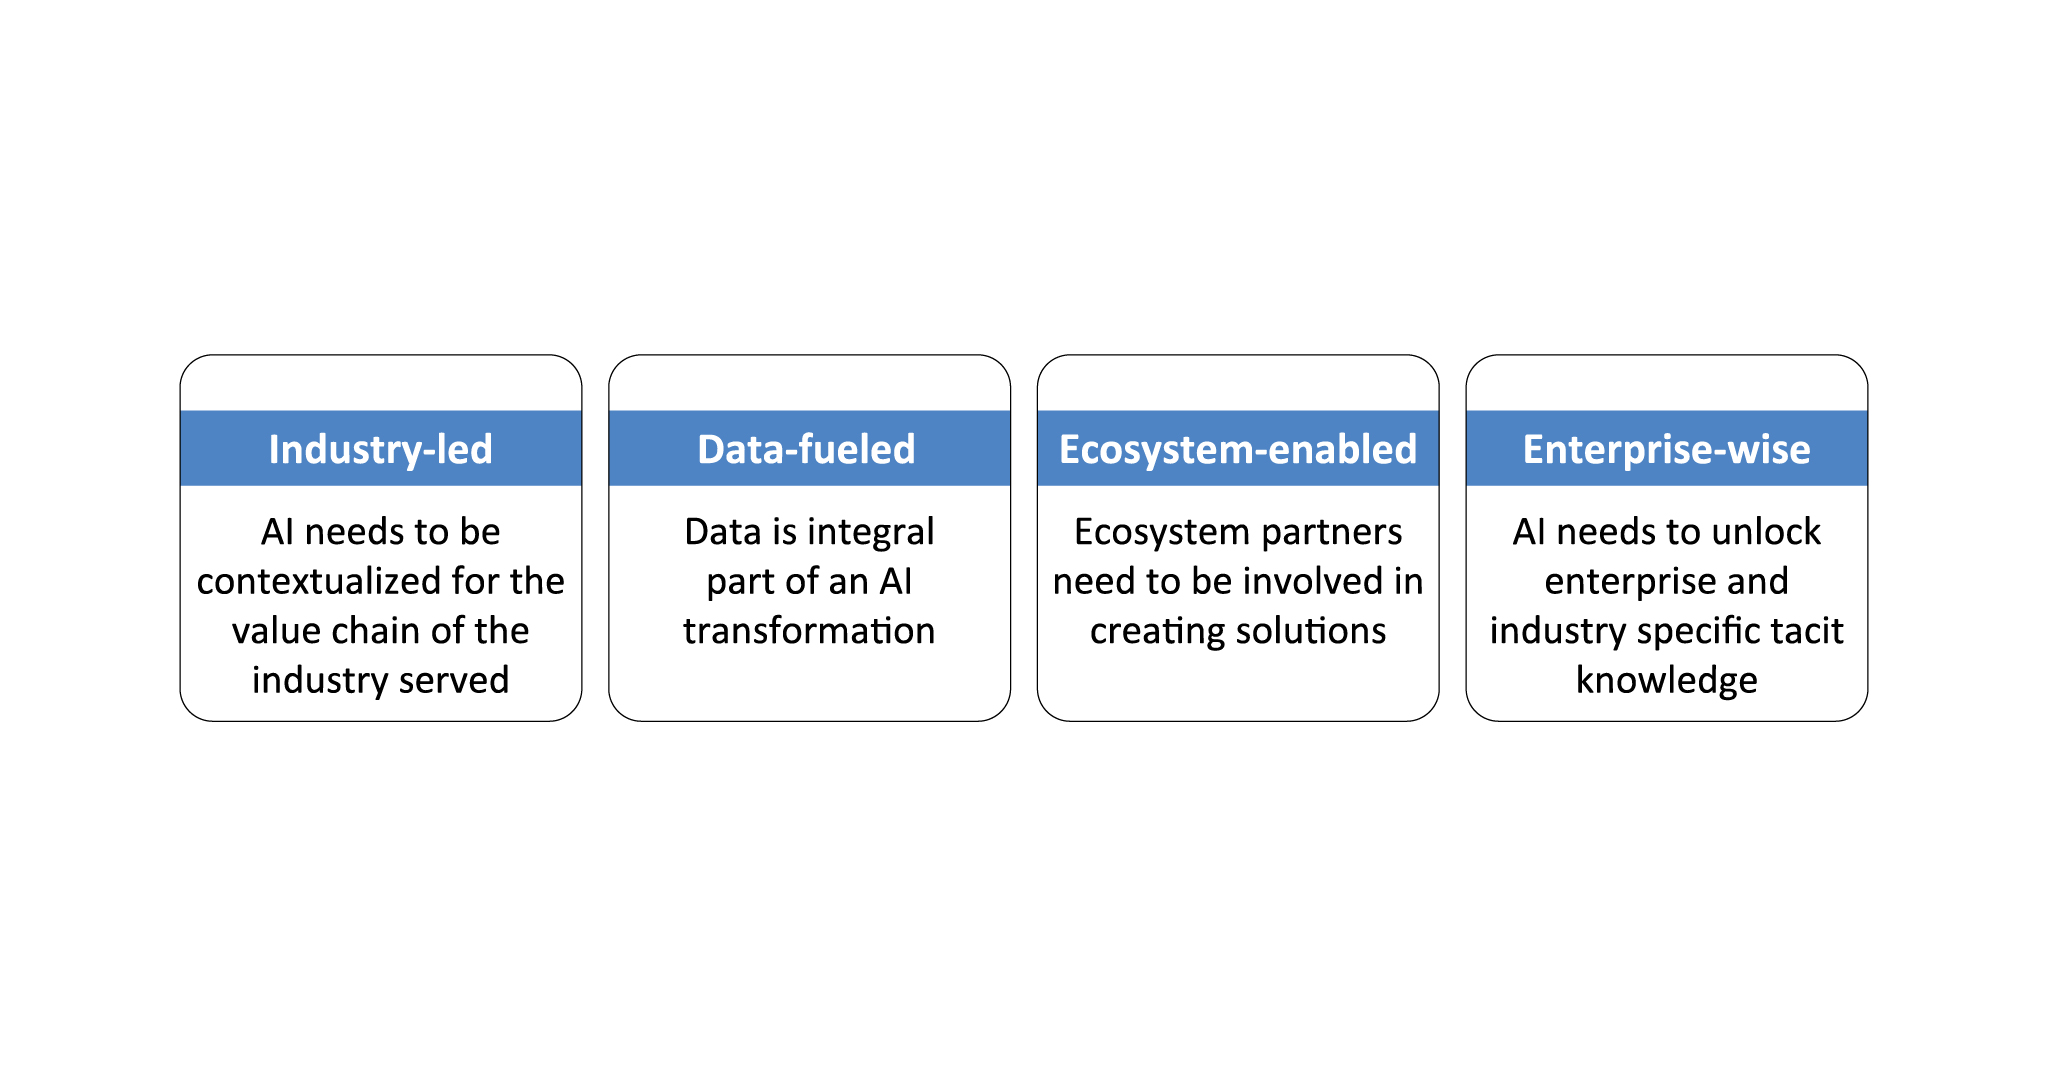 Figure 2: An “Enterprise-wise” AI adoption approach 